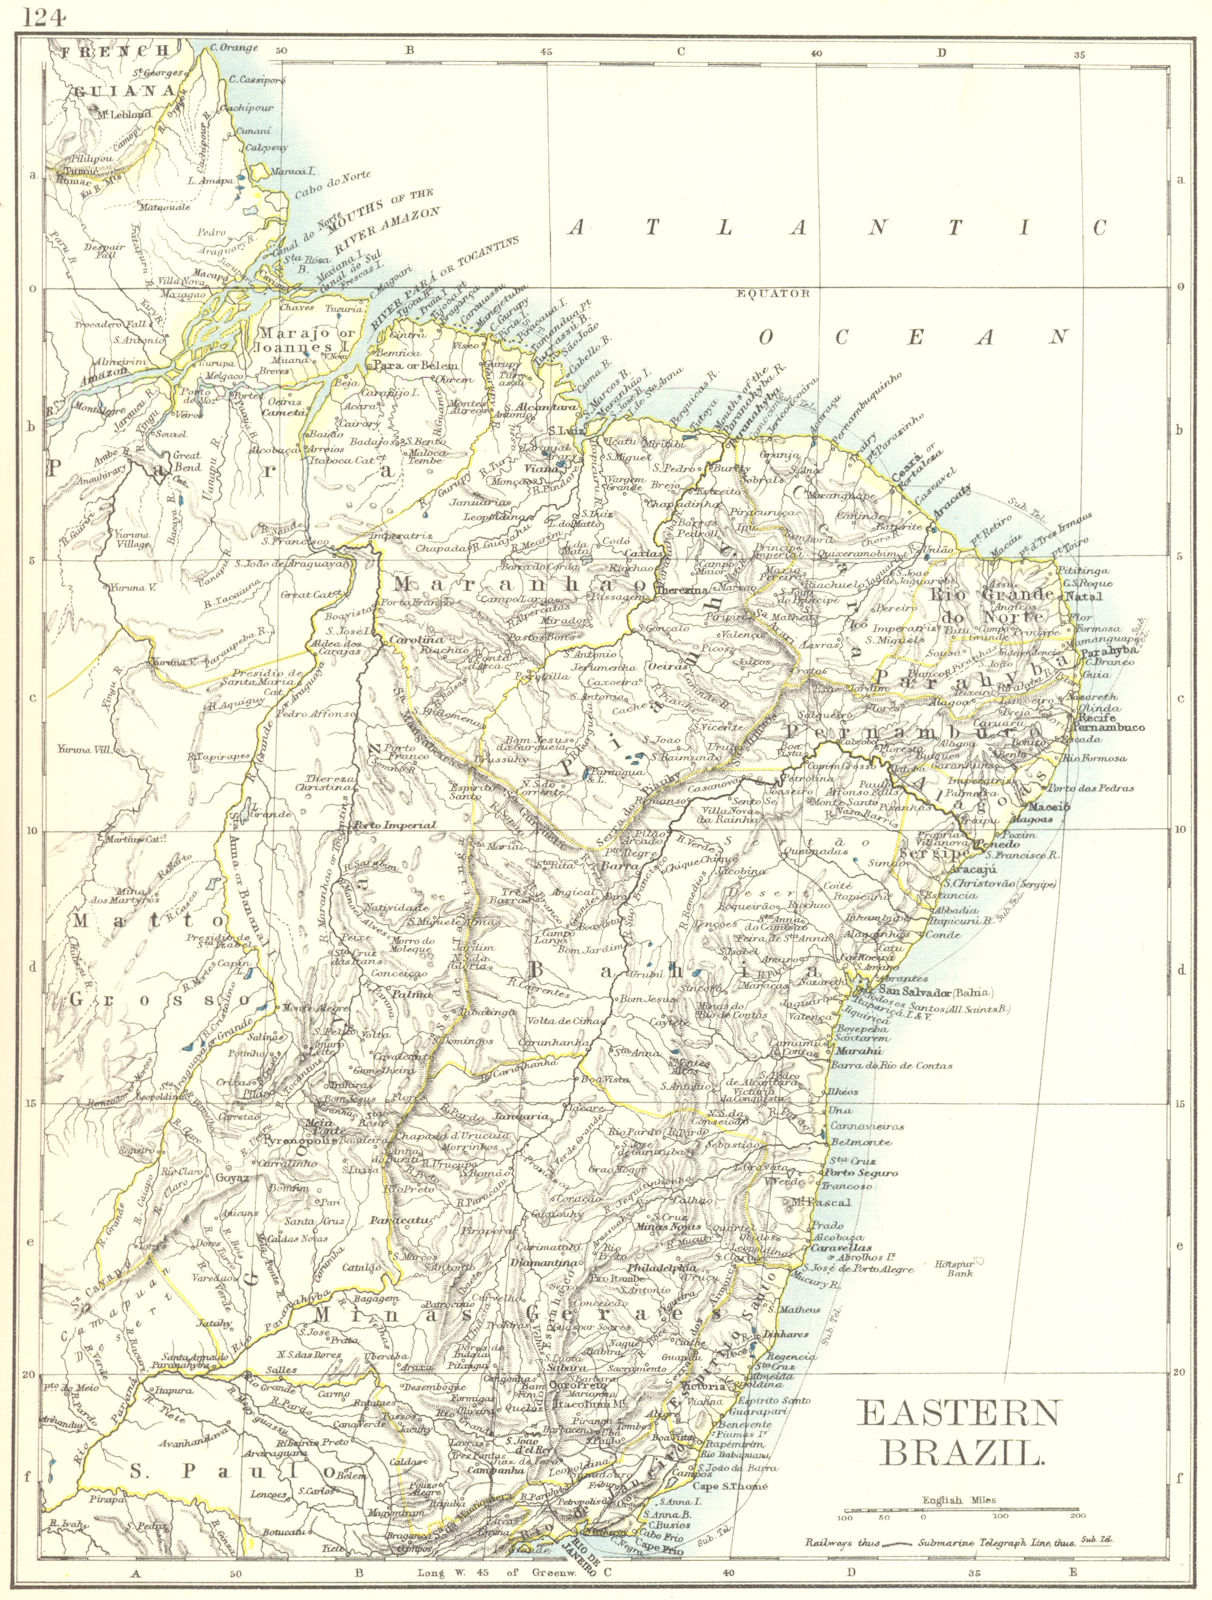 EASTERN BRAZIL. Bahia Minas Gerais Pernambuco Marabhao. JOHNSTON 1899 old map